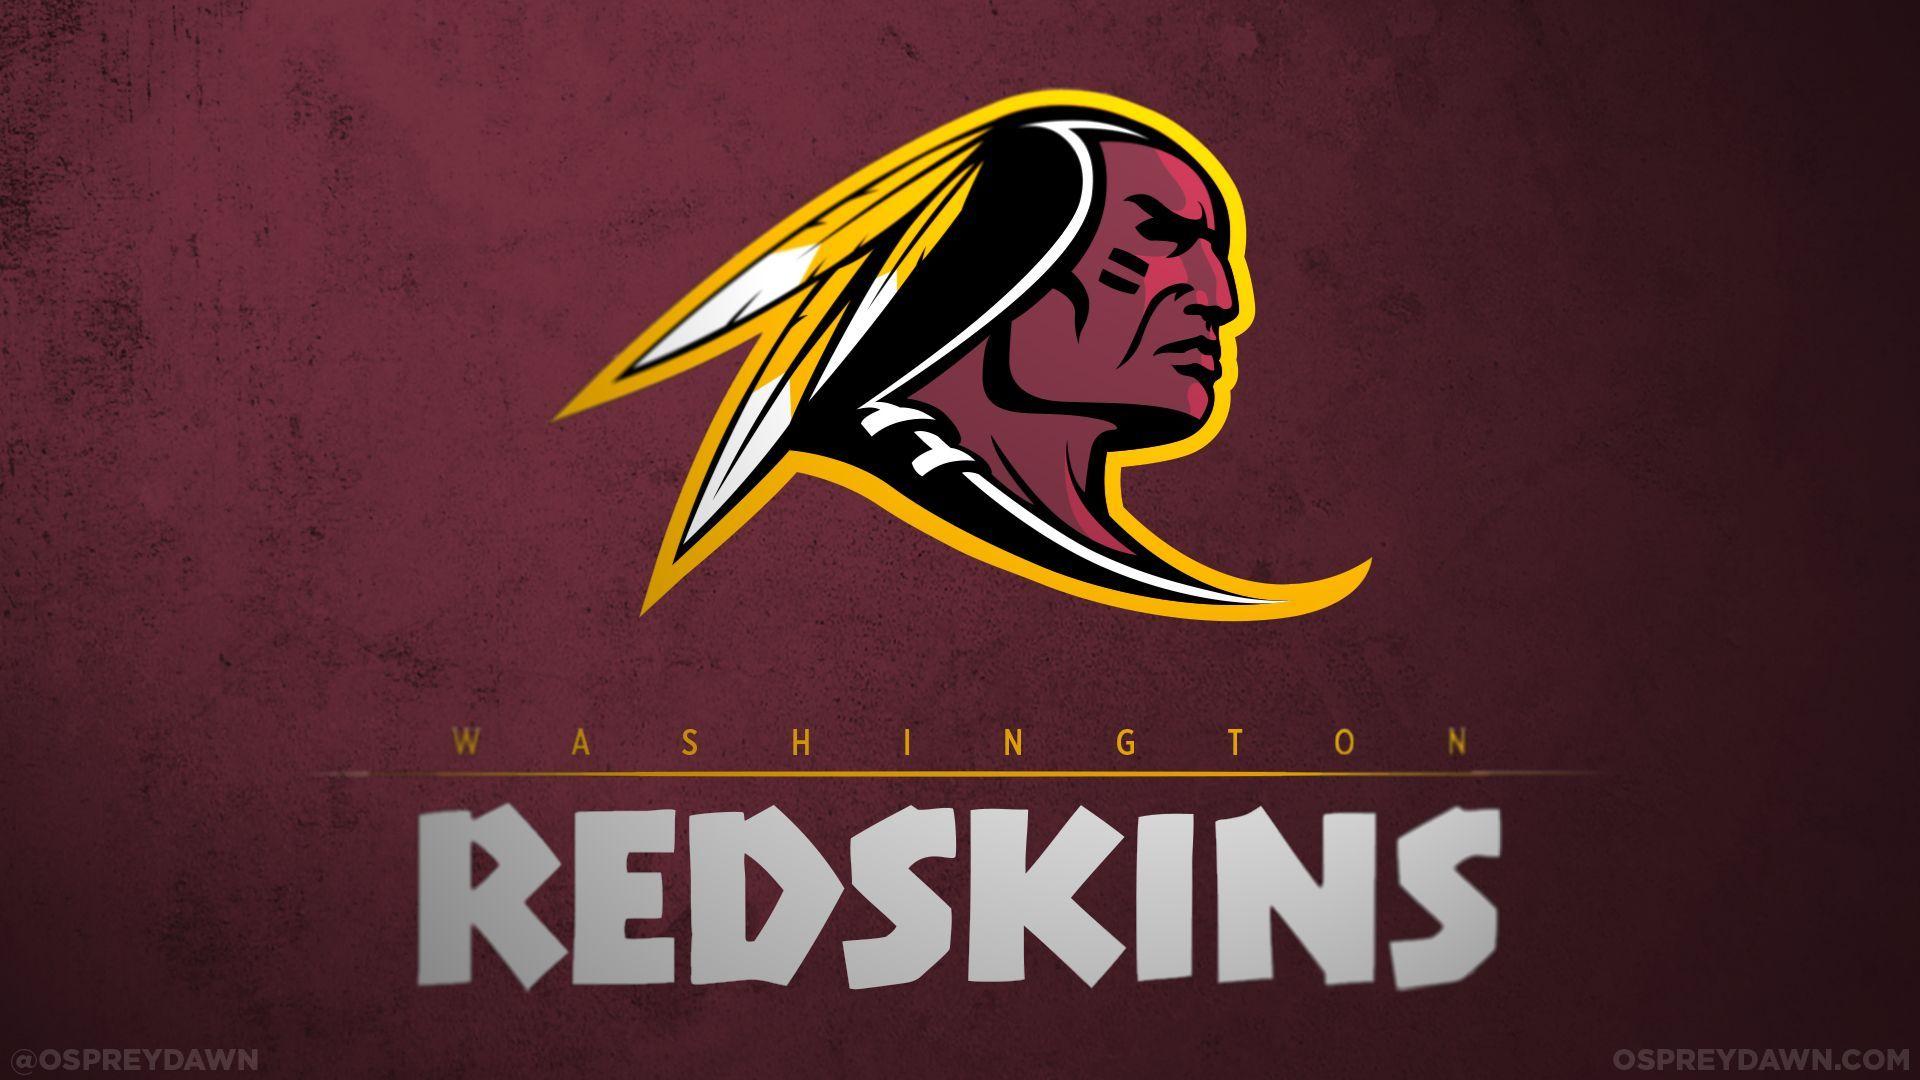 Washington Redskins Name Change Won&;t Happen, NFL Team Claims